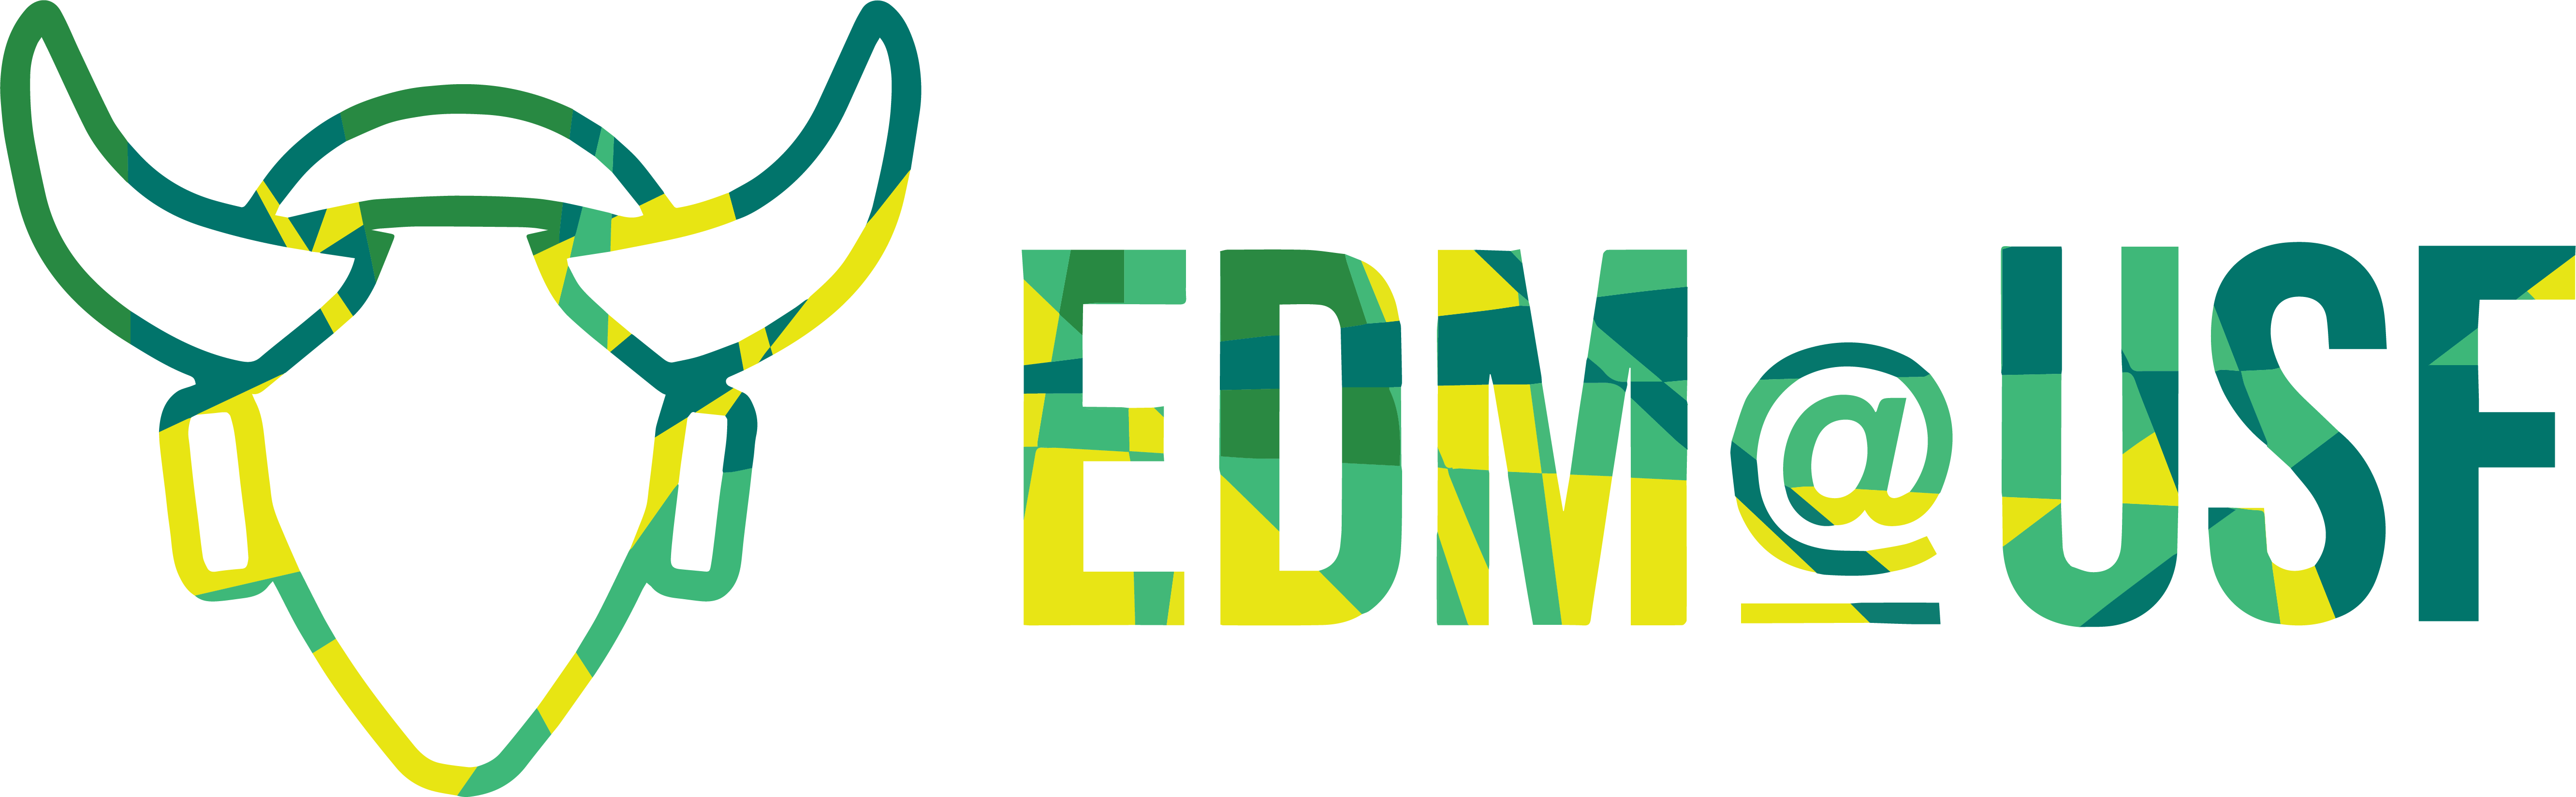 Usf Edm Club - Electronic Dance Music (5328x1648)